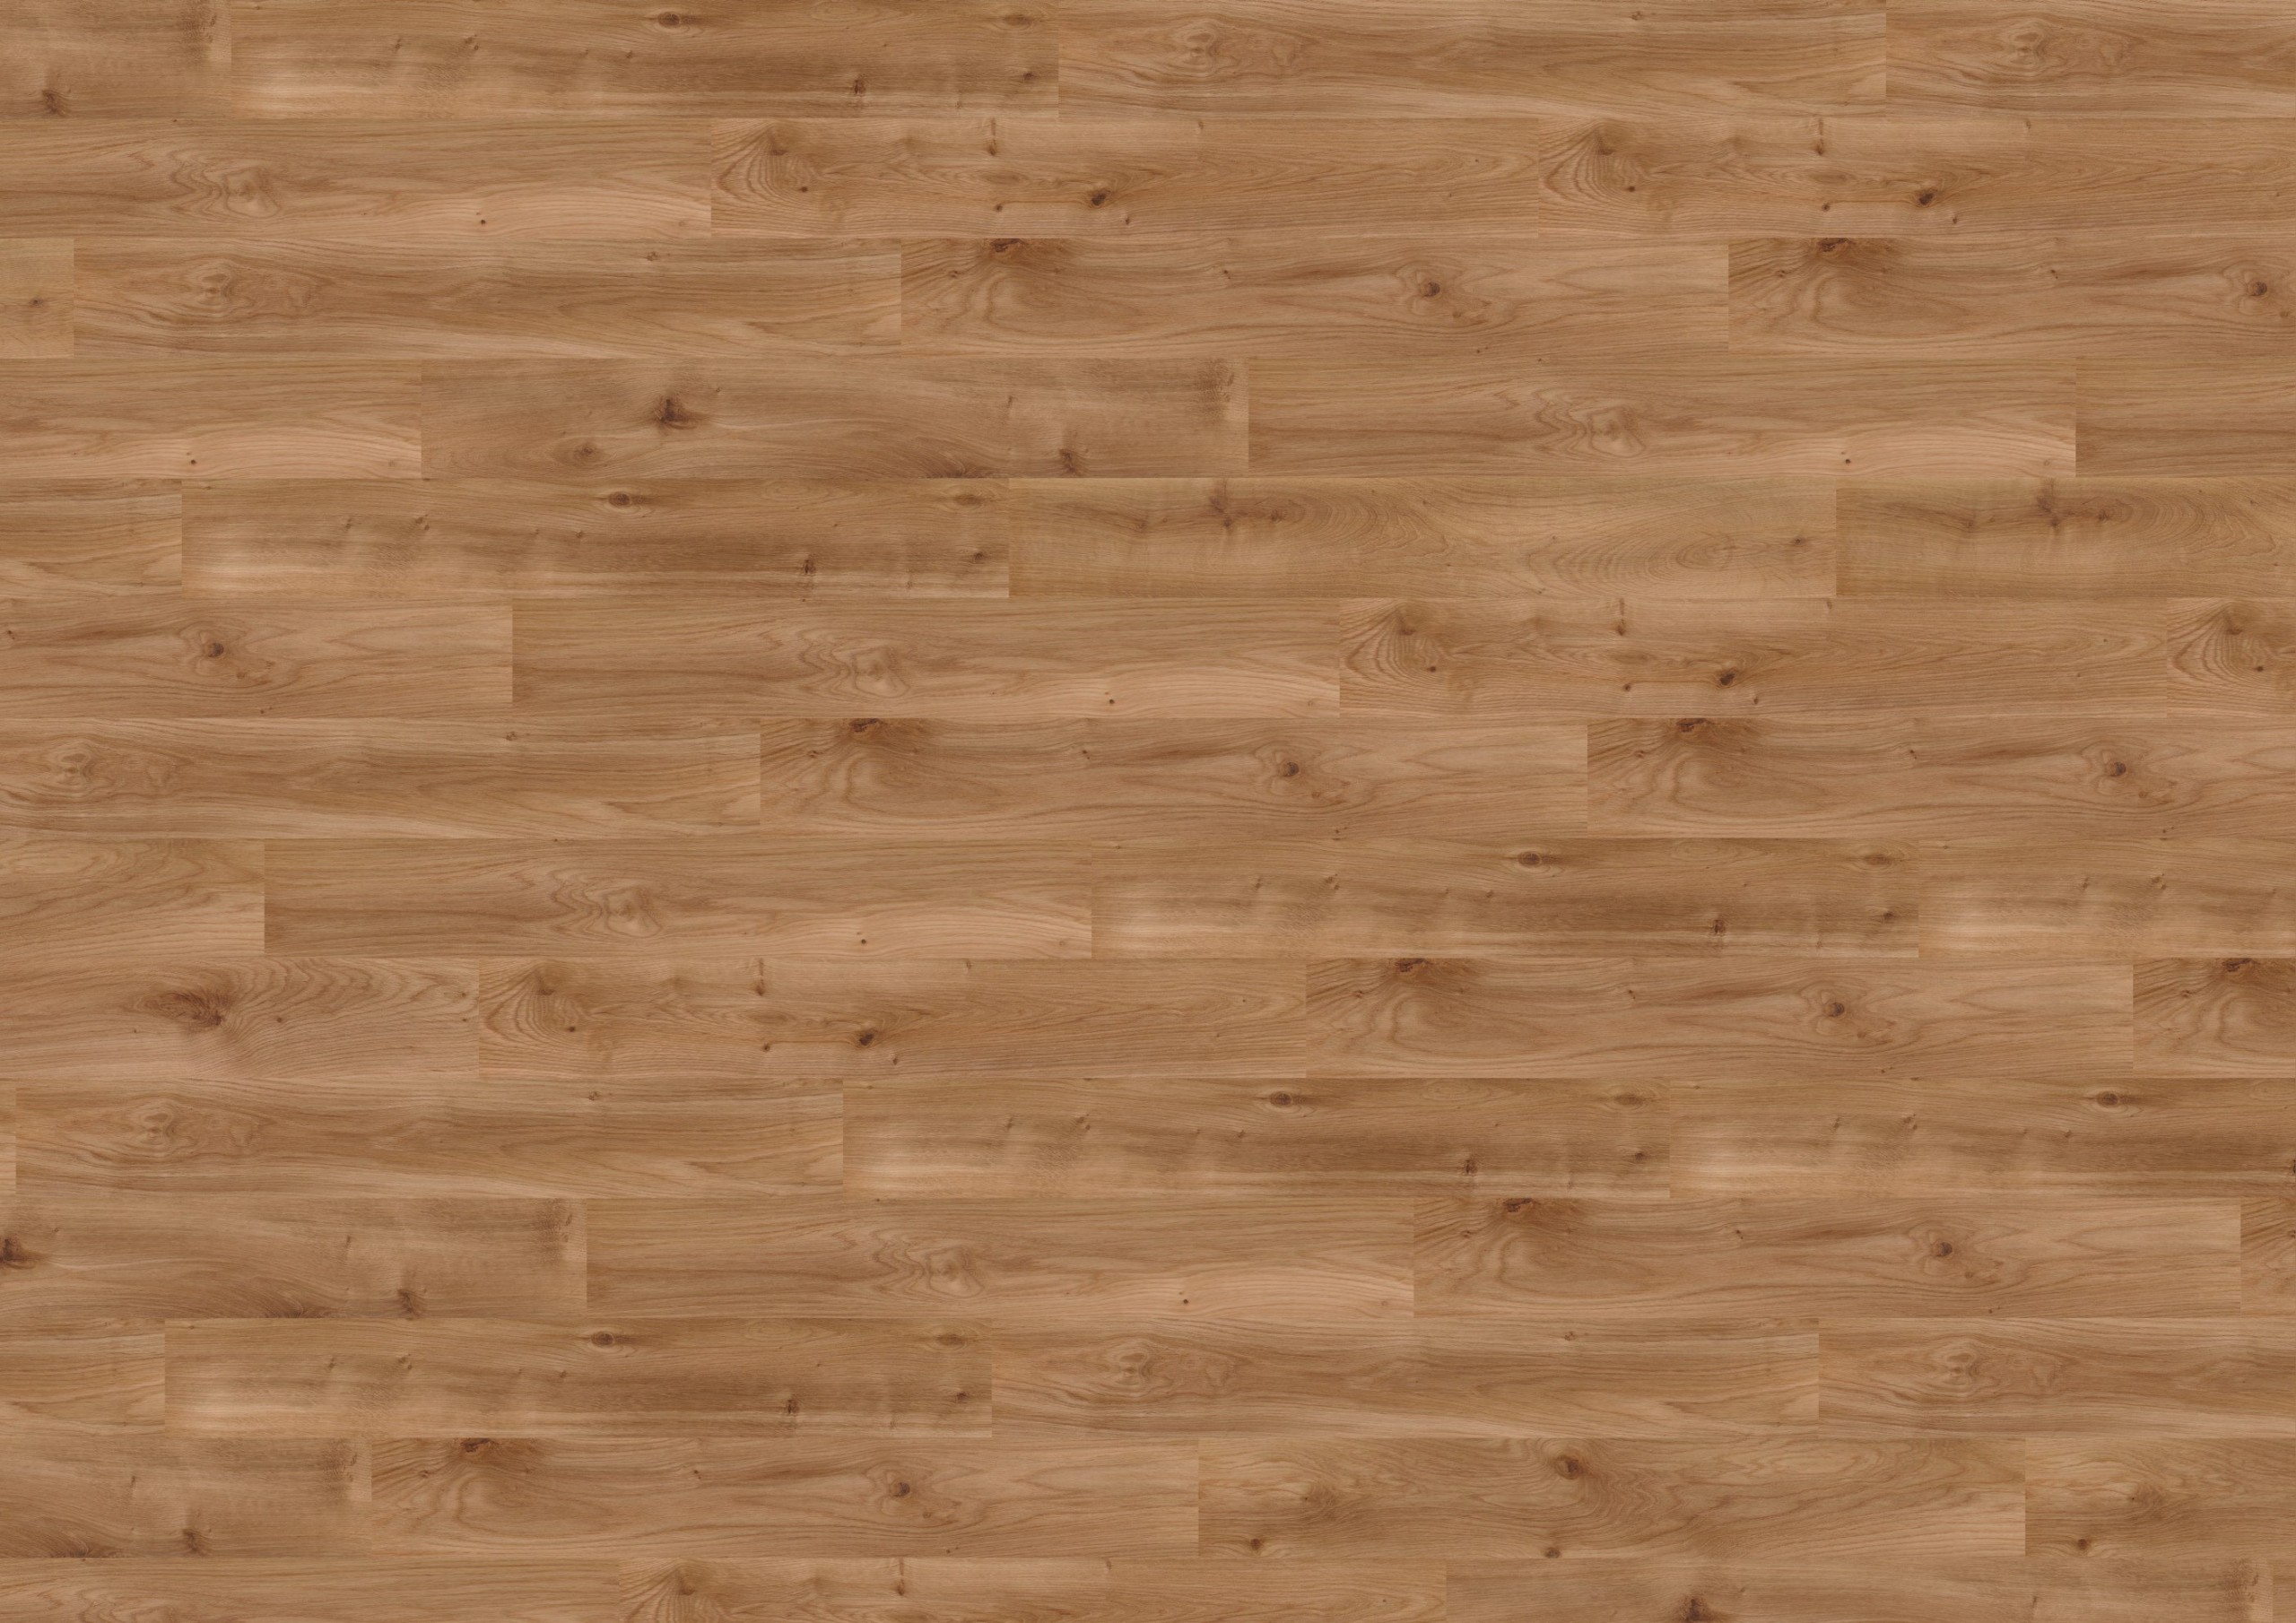 Wineo Pureline Bioboden Multi-Layer 1000 wood L Art. MLP300R Intensive Oak Caramel 9 mm